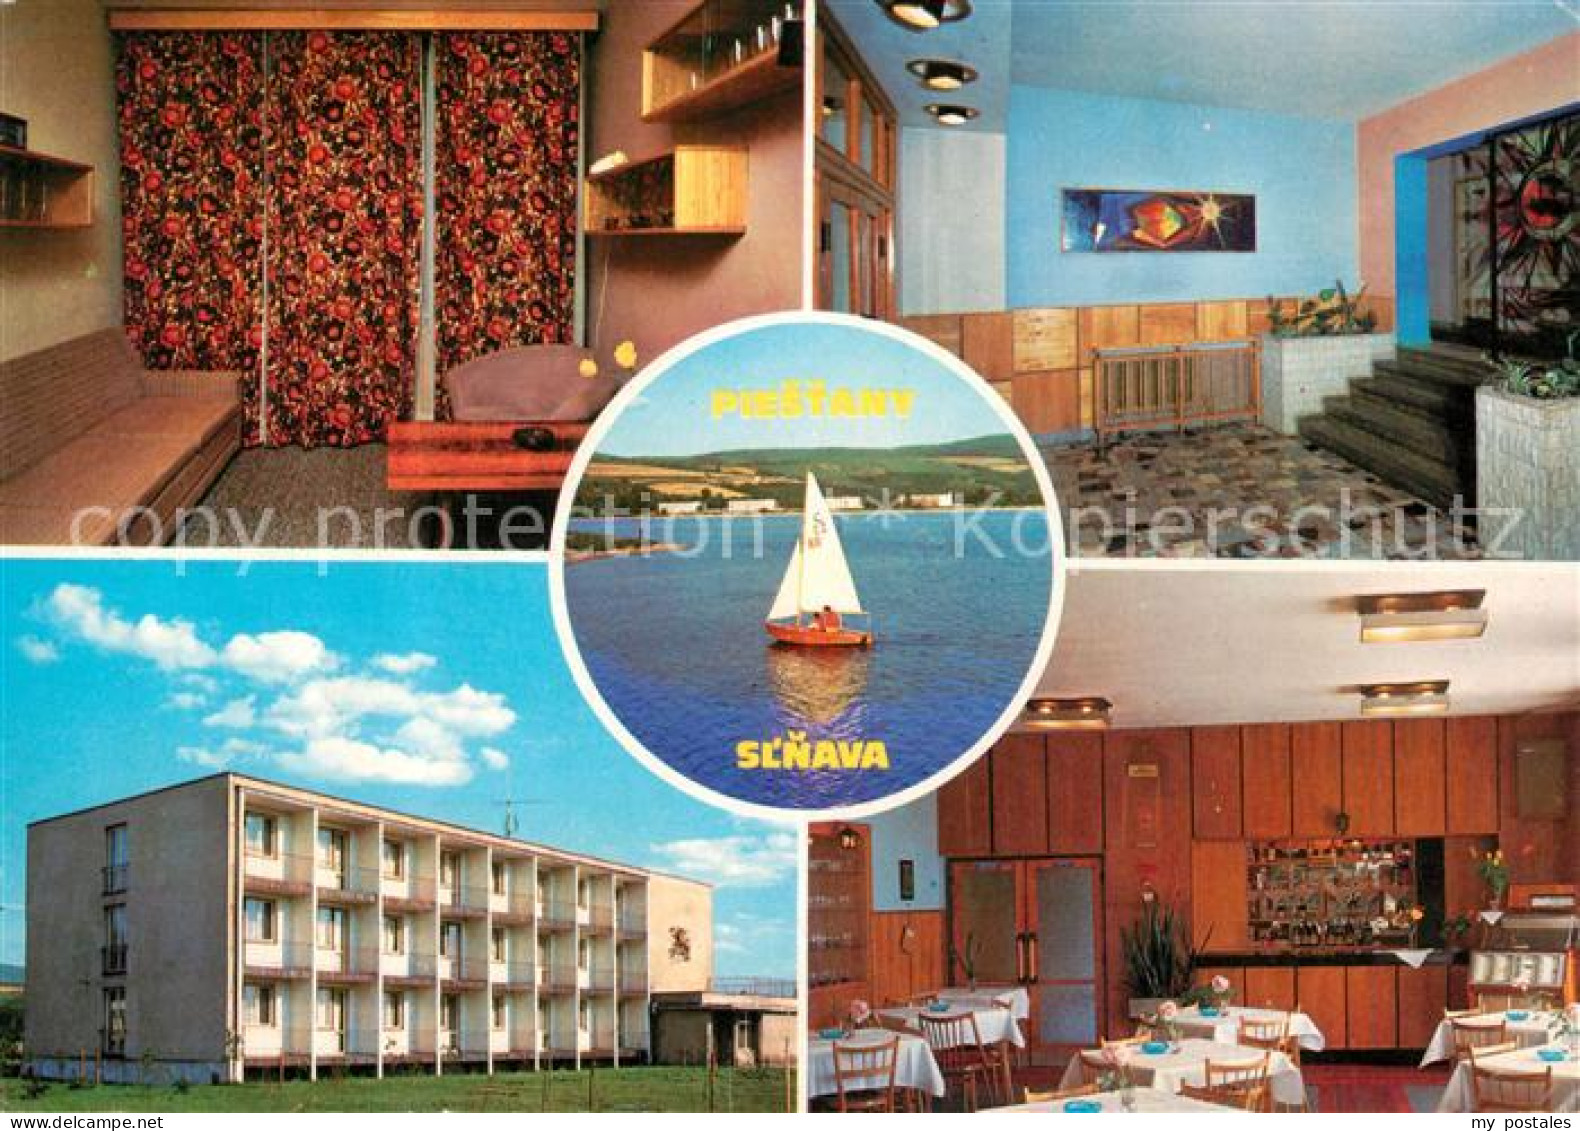 73166067 Piestany Hotel Banska Bystrica - Slovakia